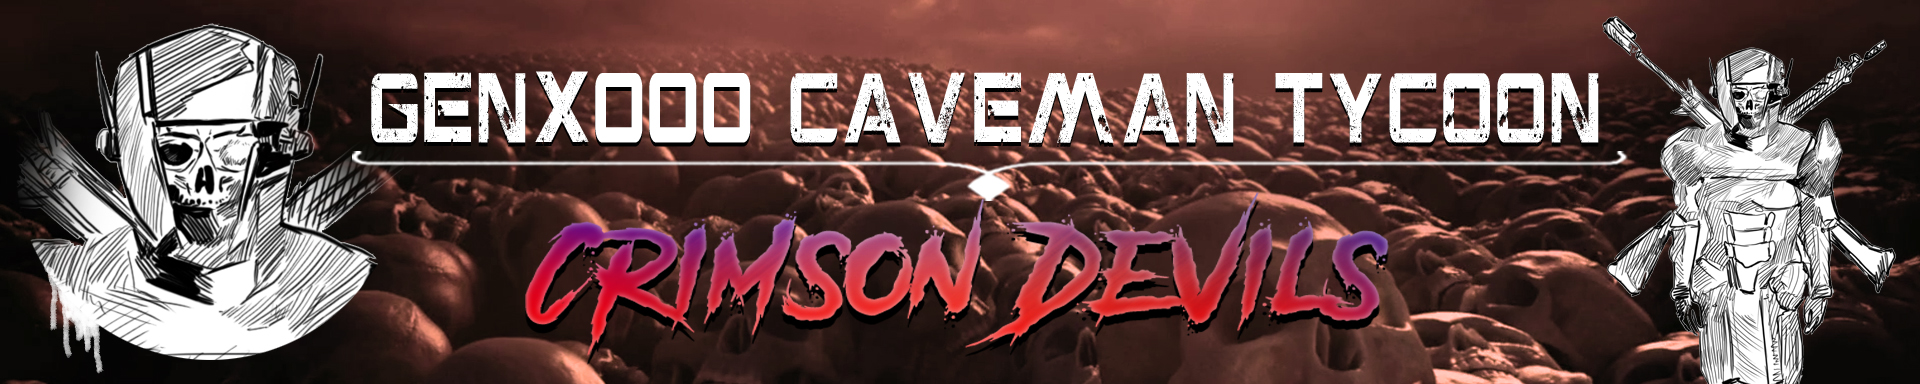 GenX000 Caveman Tycoon.jpg